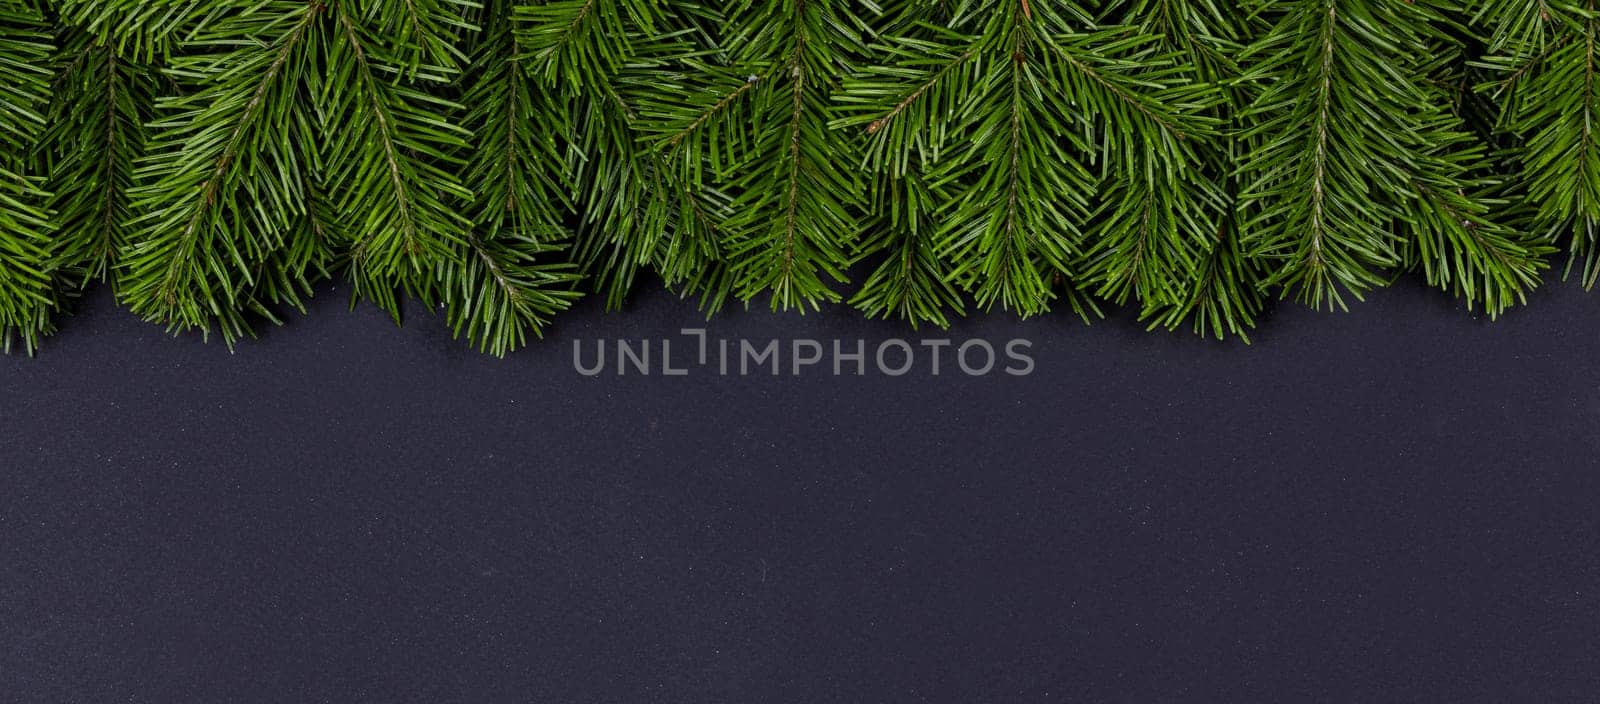 Christmas fir tree on black background by Yellowj